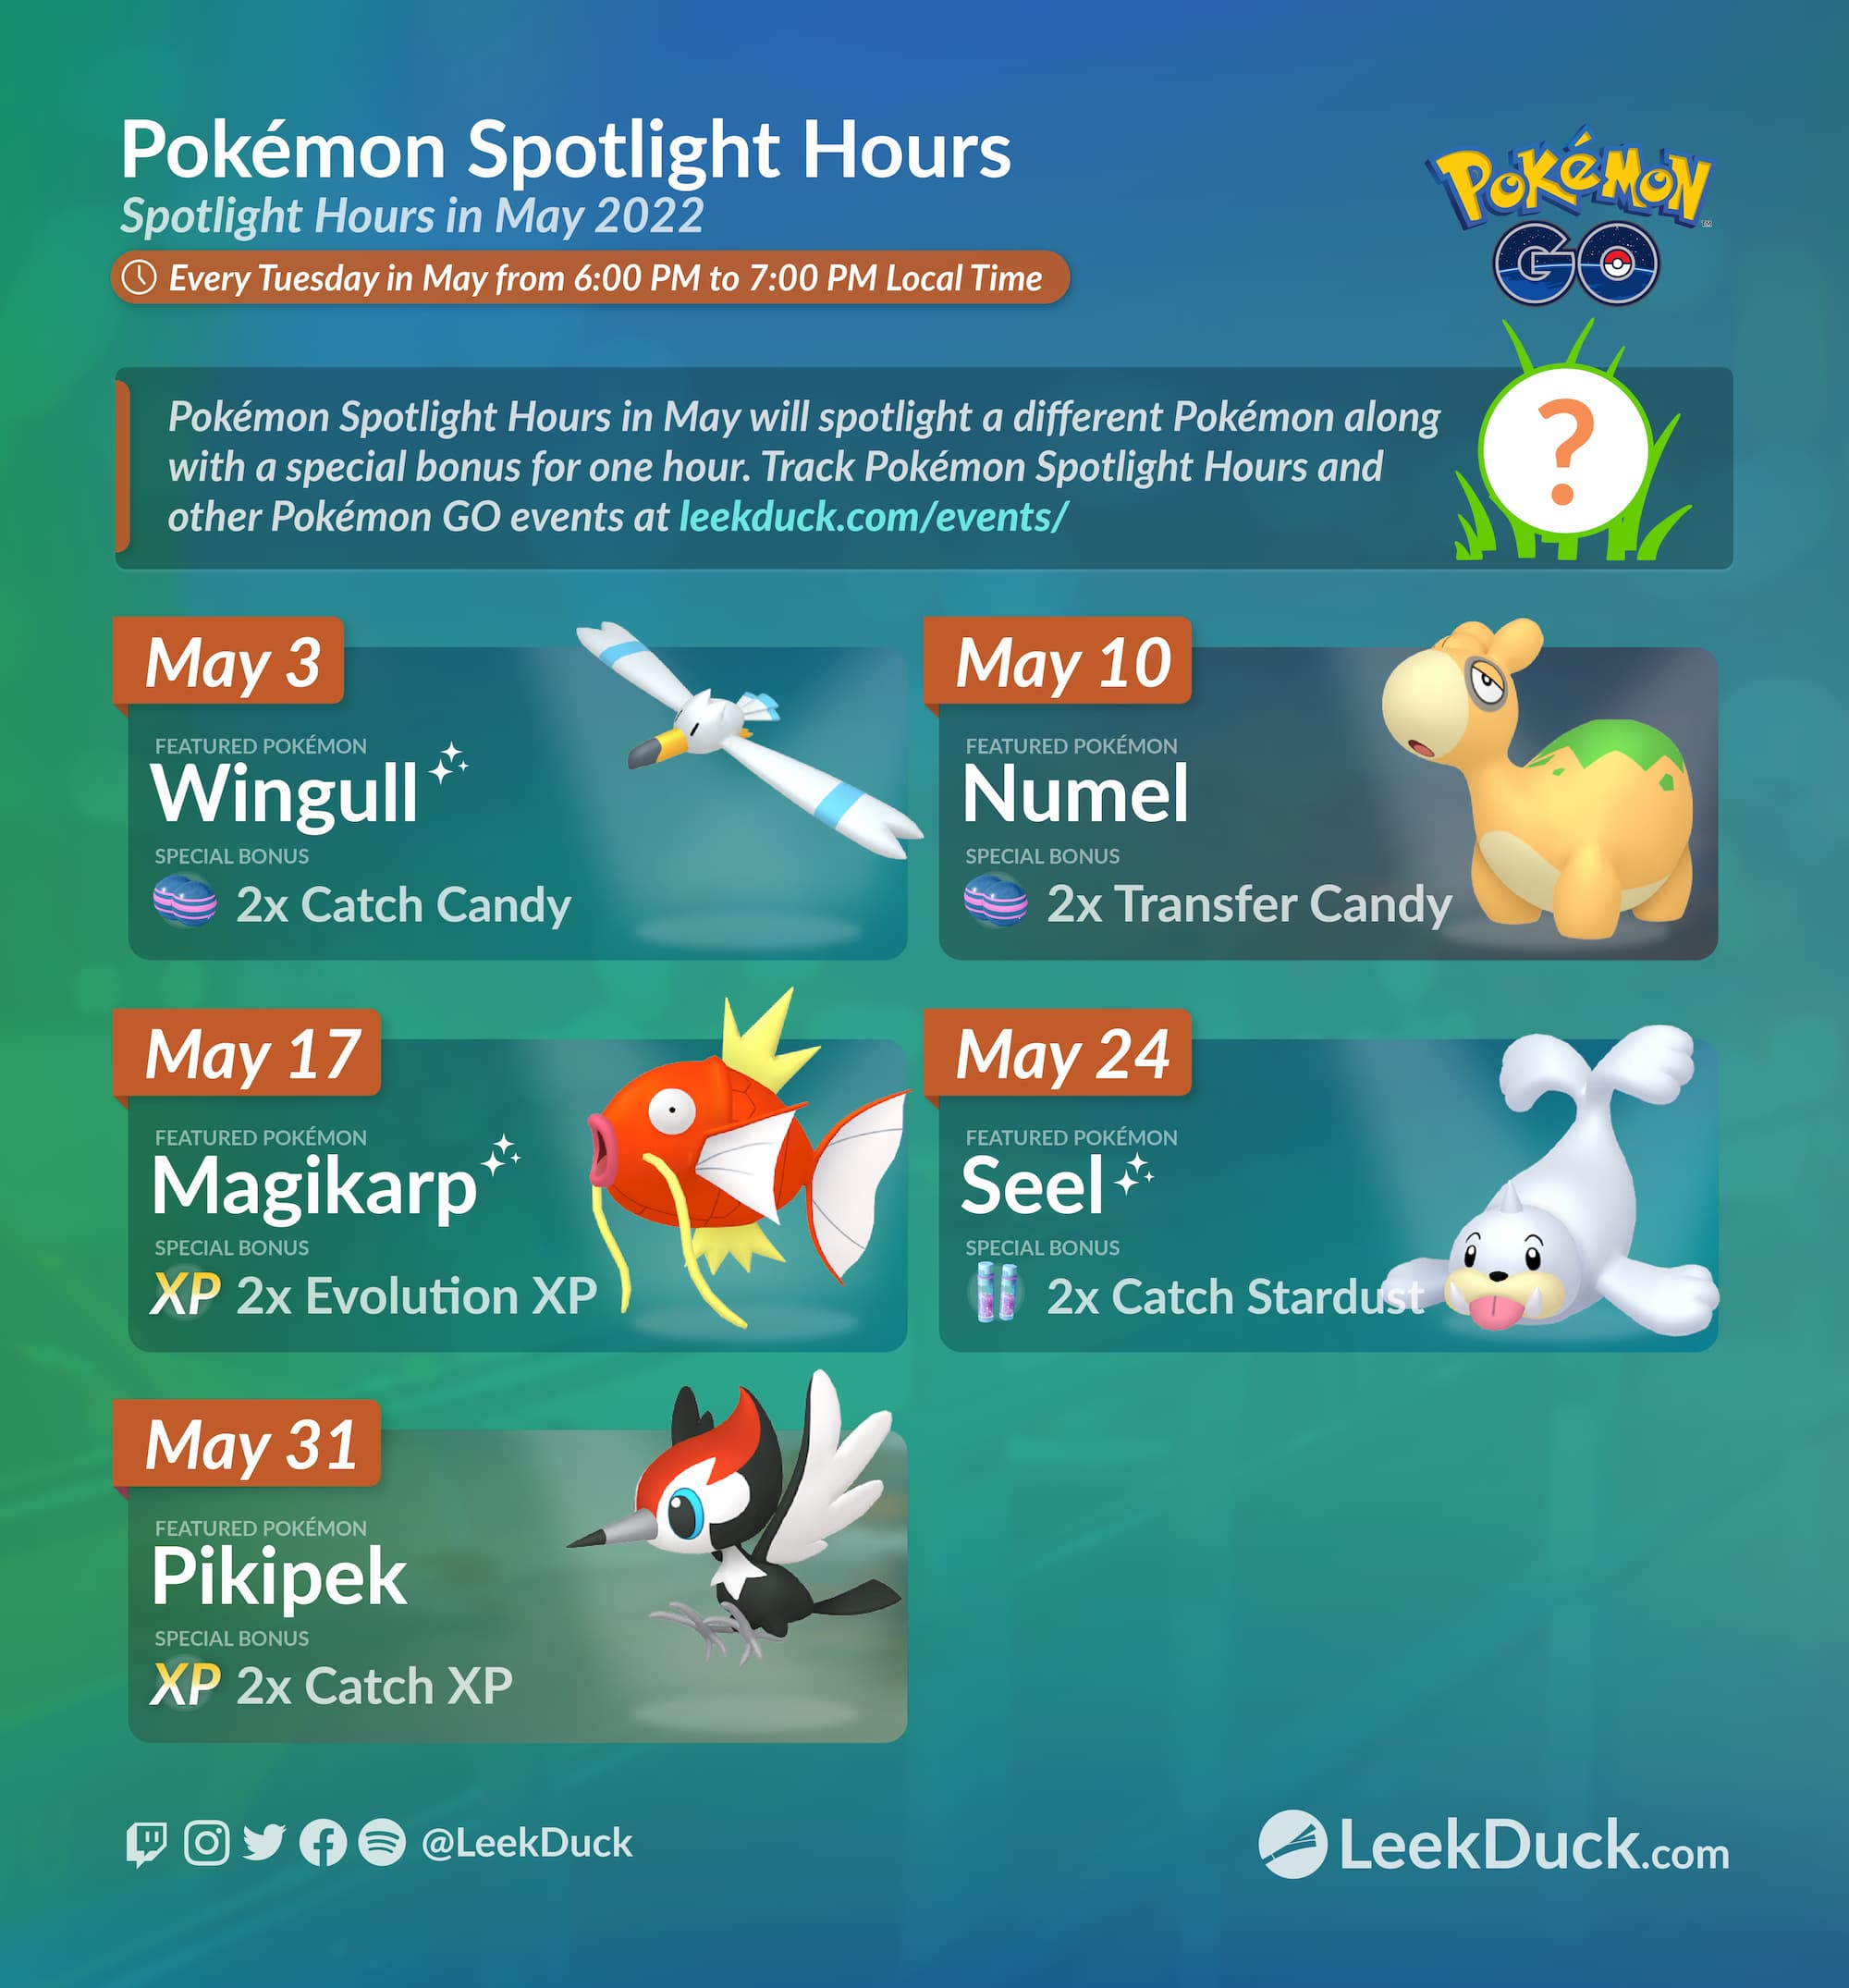 Seel Spotlight Hour Leek Duck Pokémon GO News and Resources